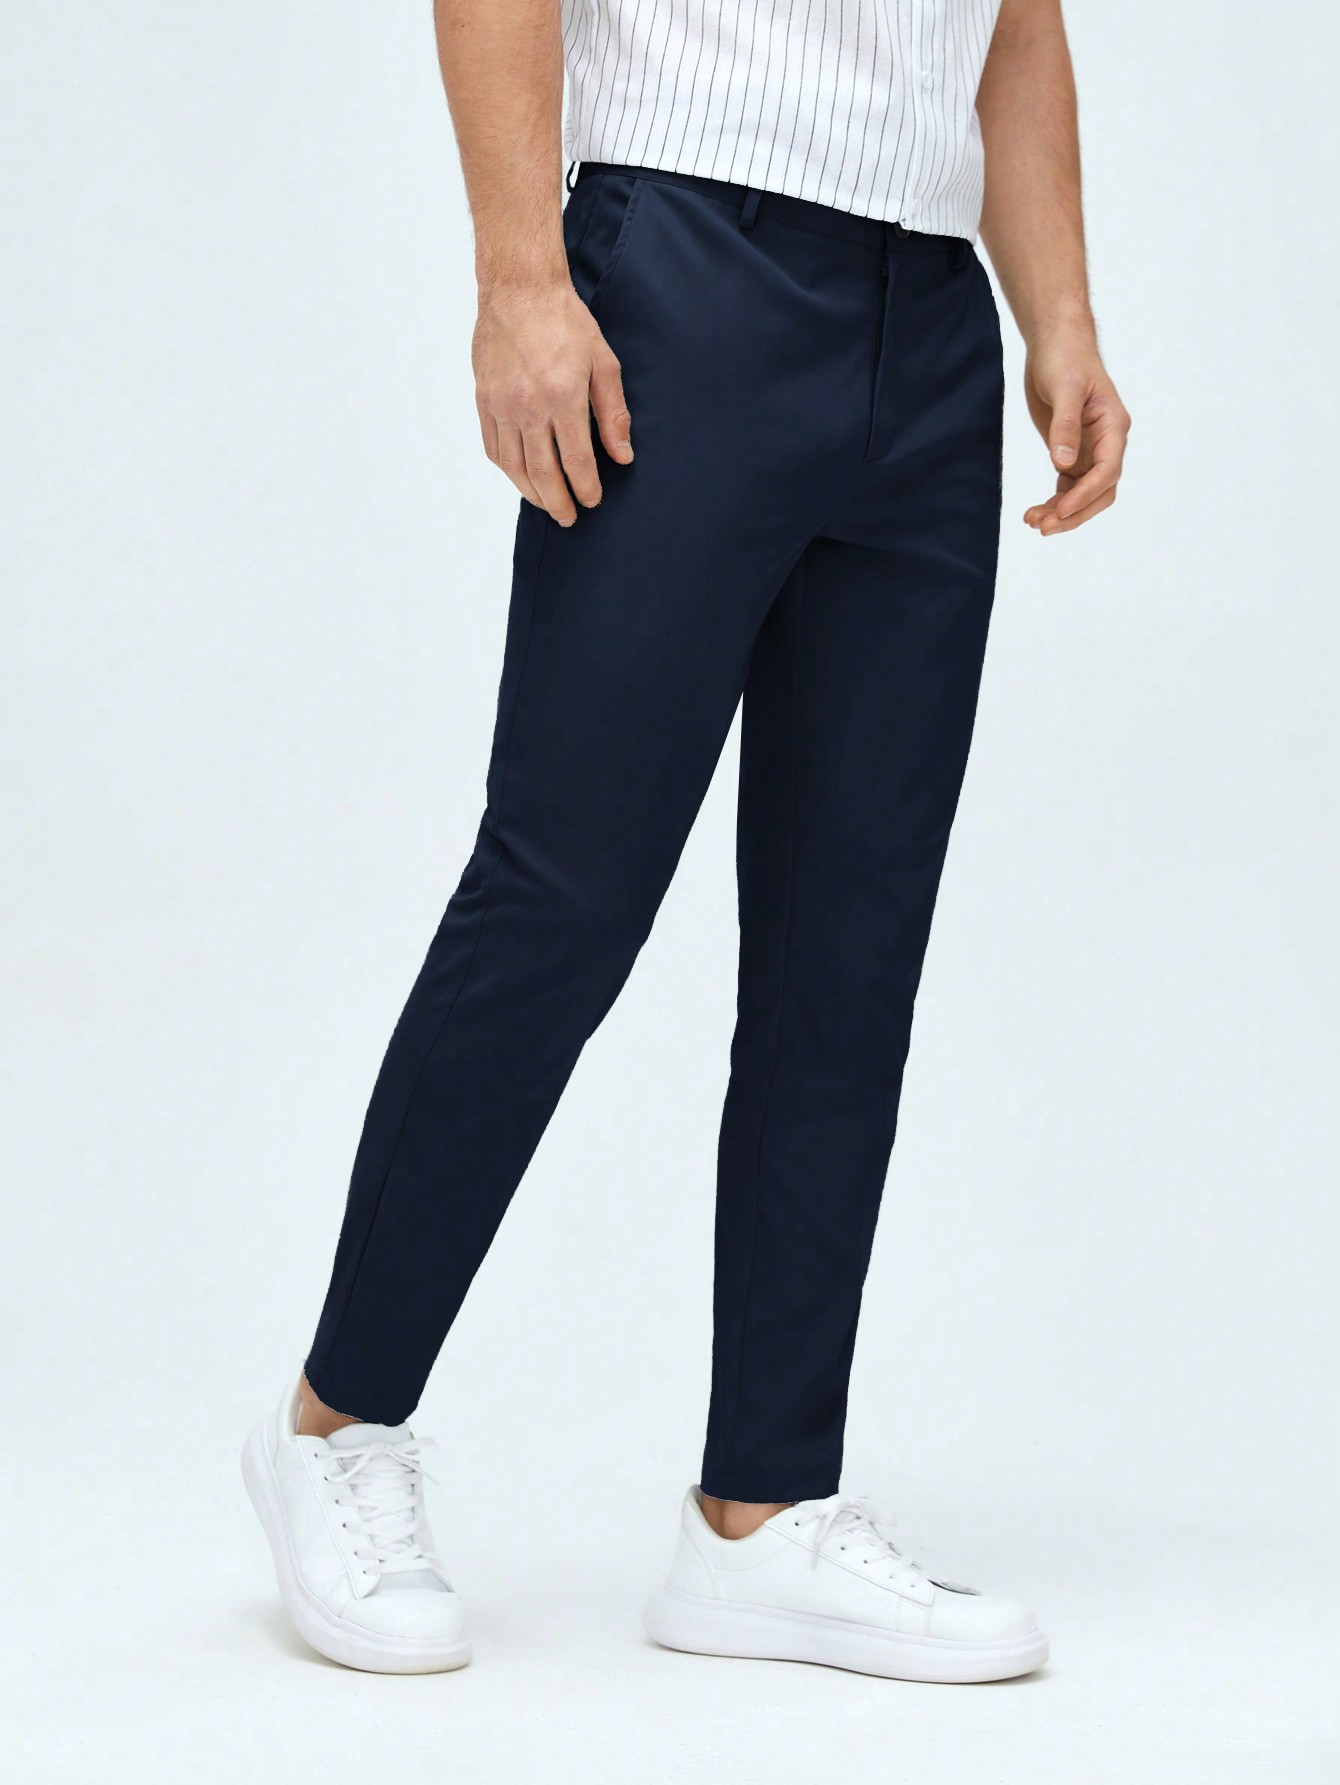 цена Мужские классические классические брюки из тканого материала с боковыми карманами Manfinity Mode, темно-синий